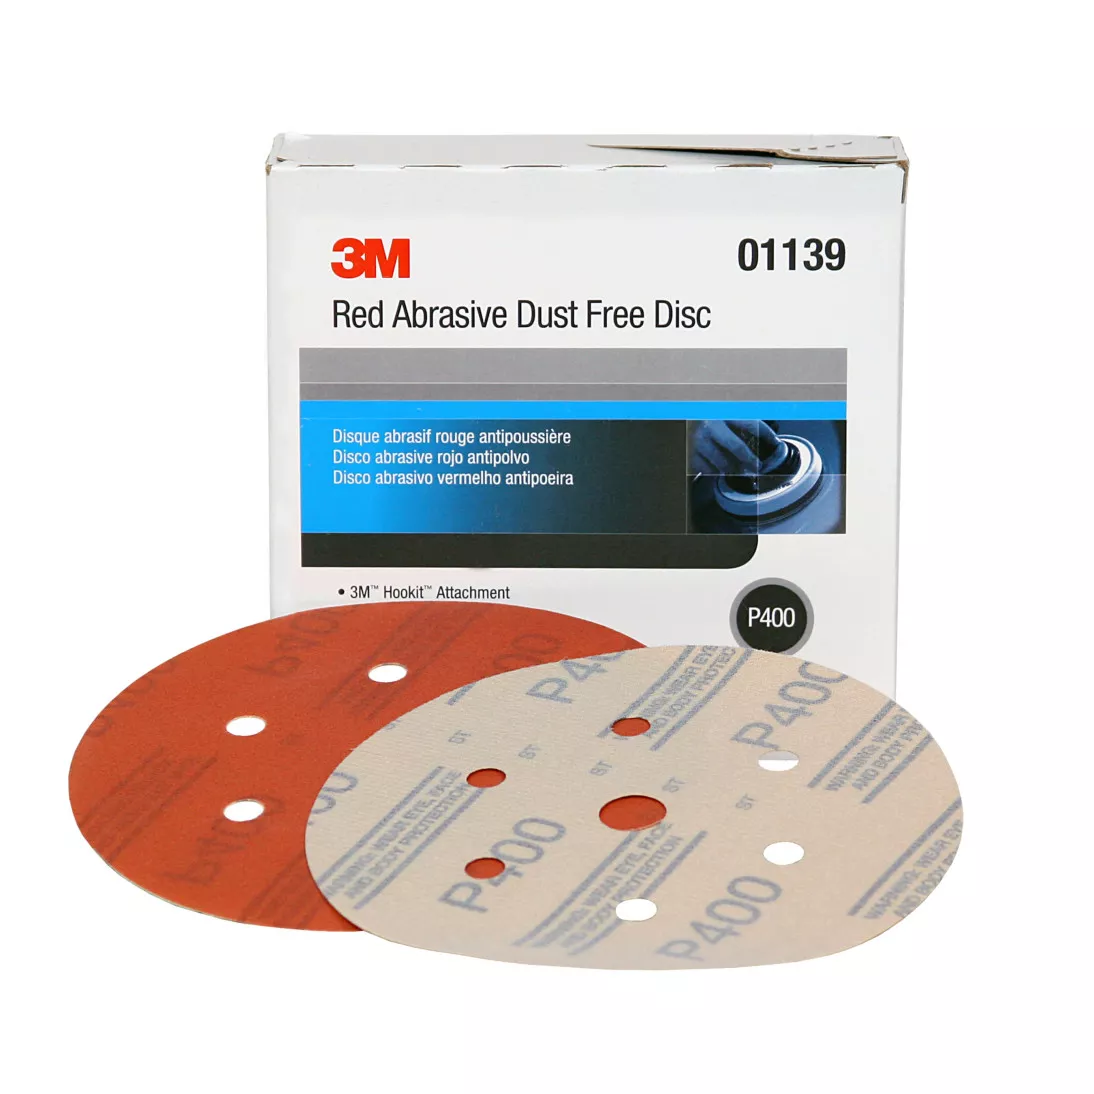 3M™ Hookit™ Red Abrasive Disc Dust Free, 01139, 6 in, P400, 50 discs per
carton, 6 cartons per case